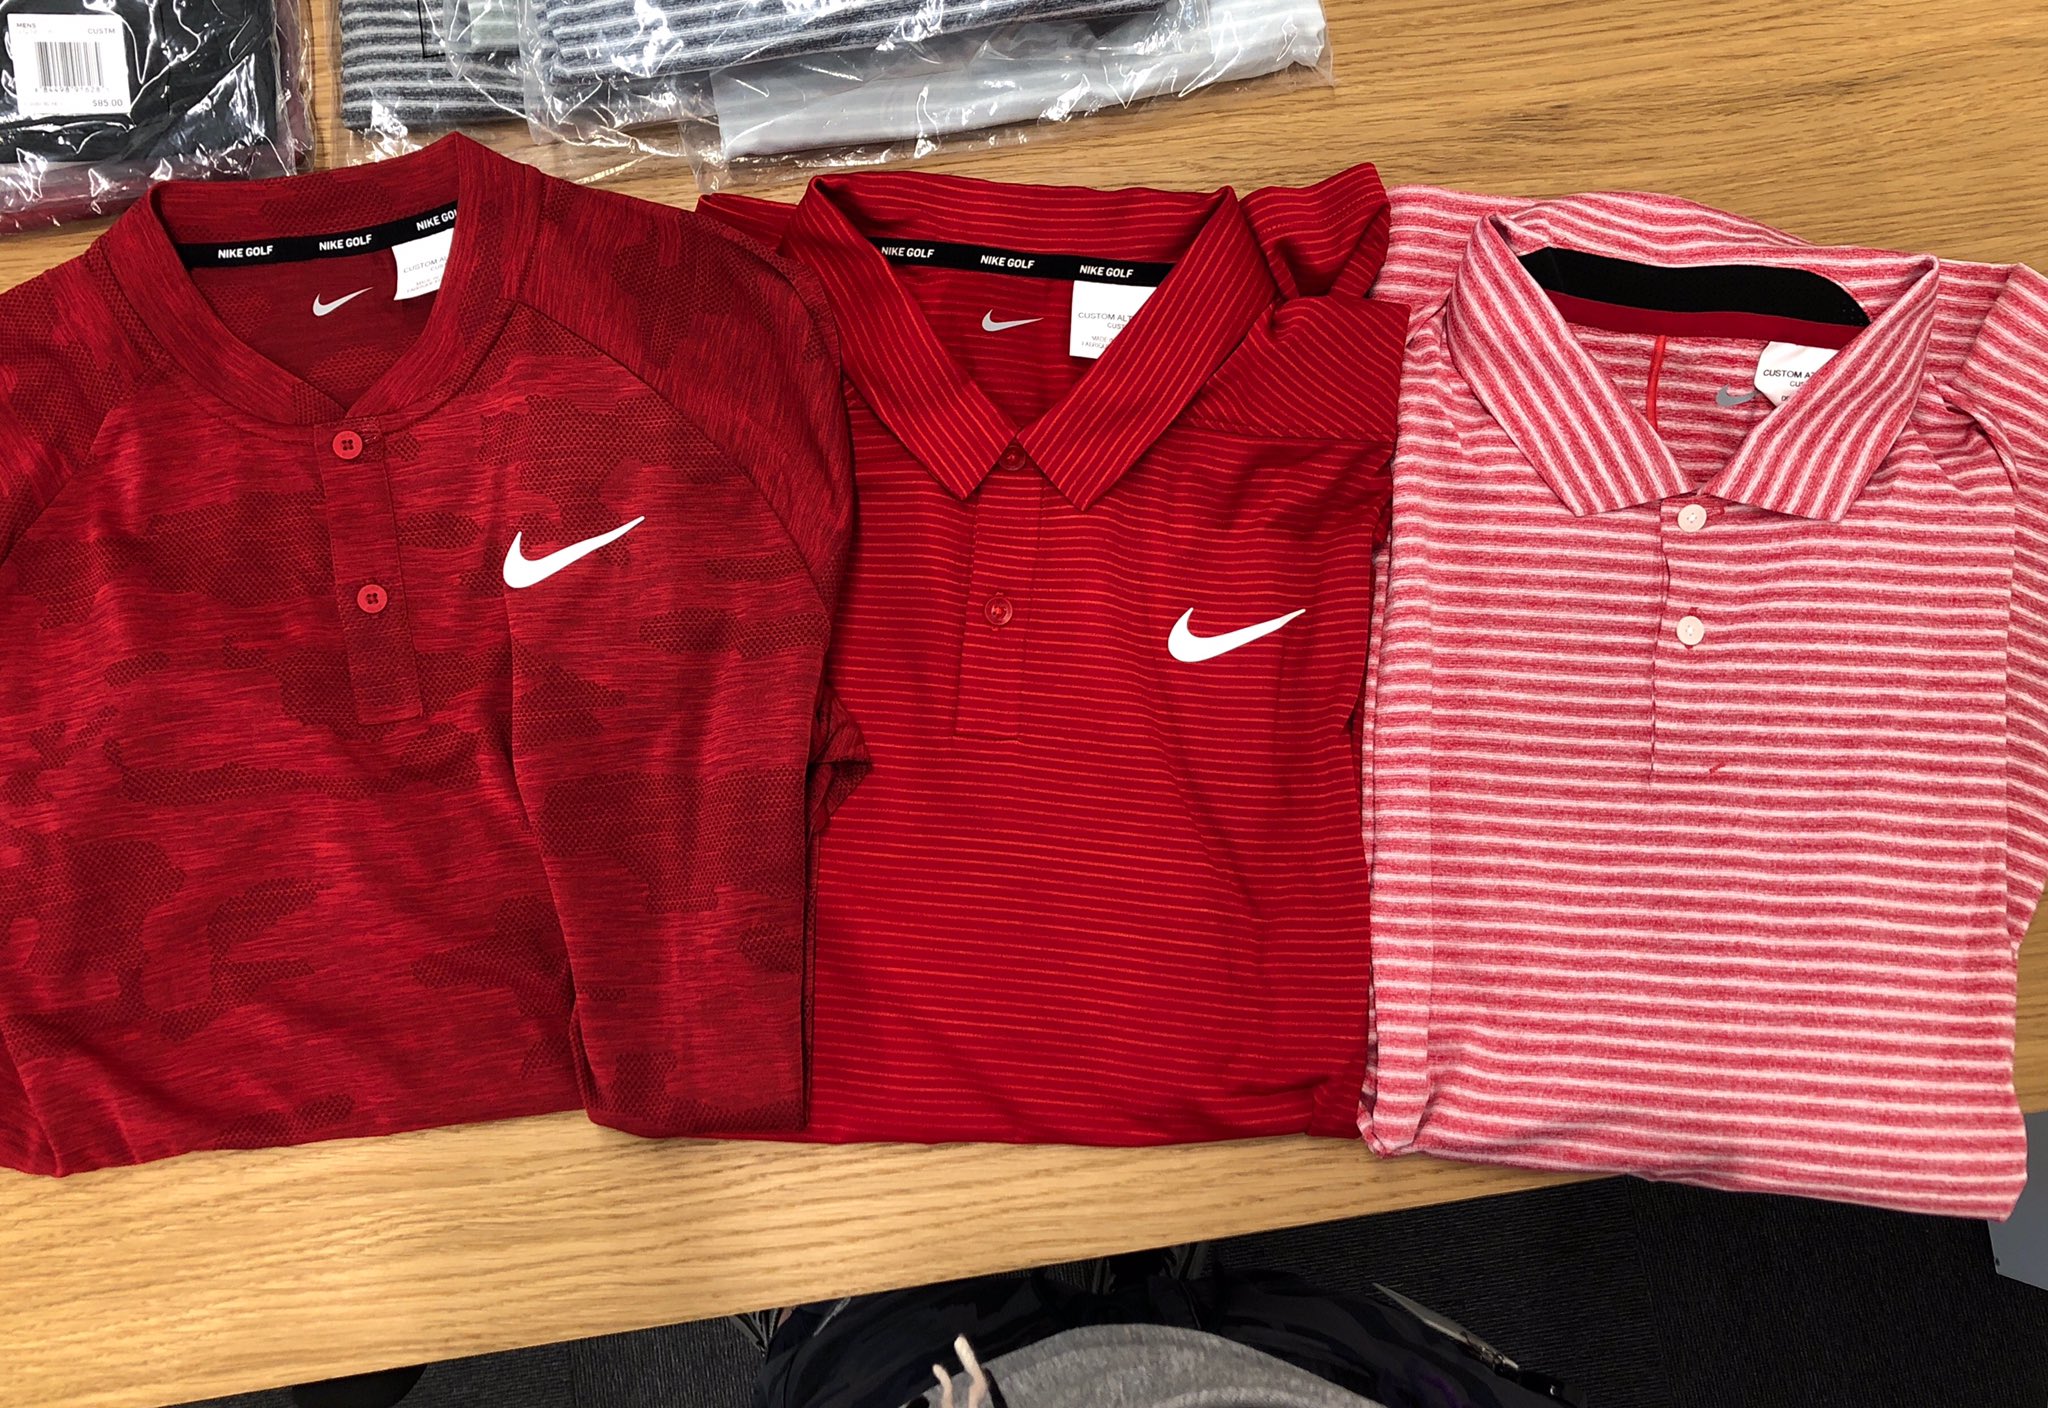 tiger woods golf shirts 2019